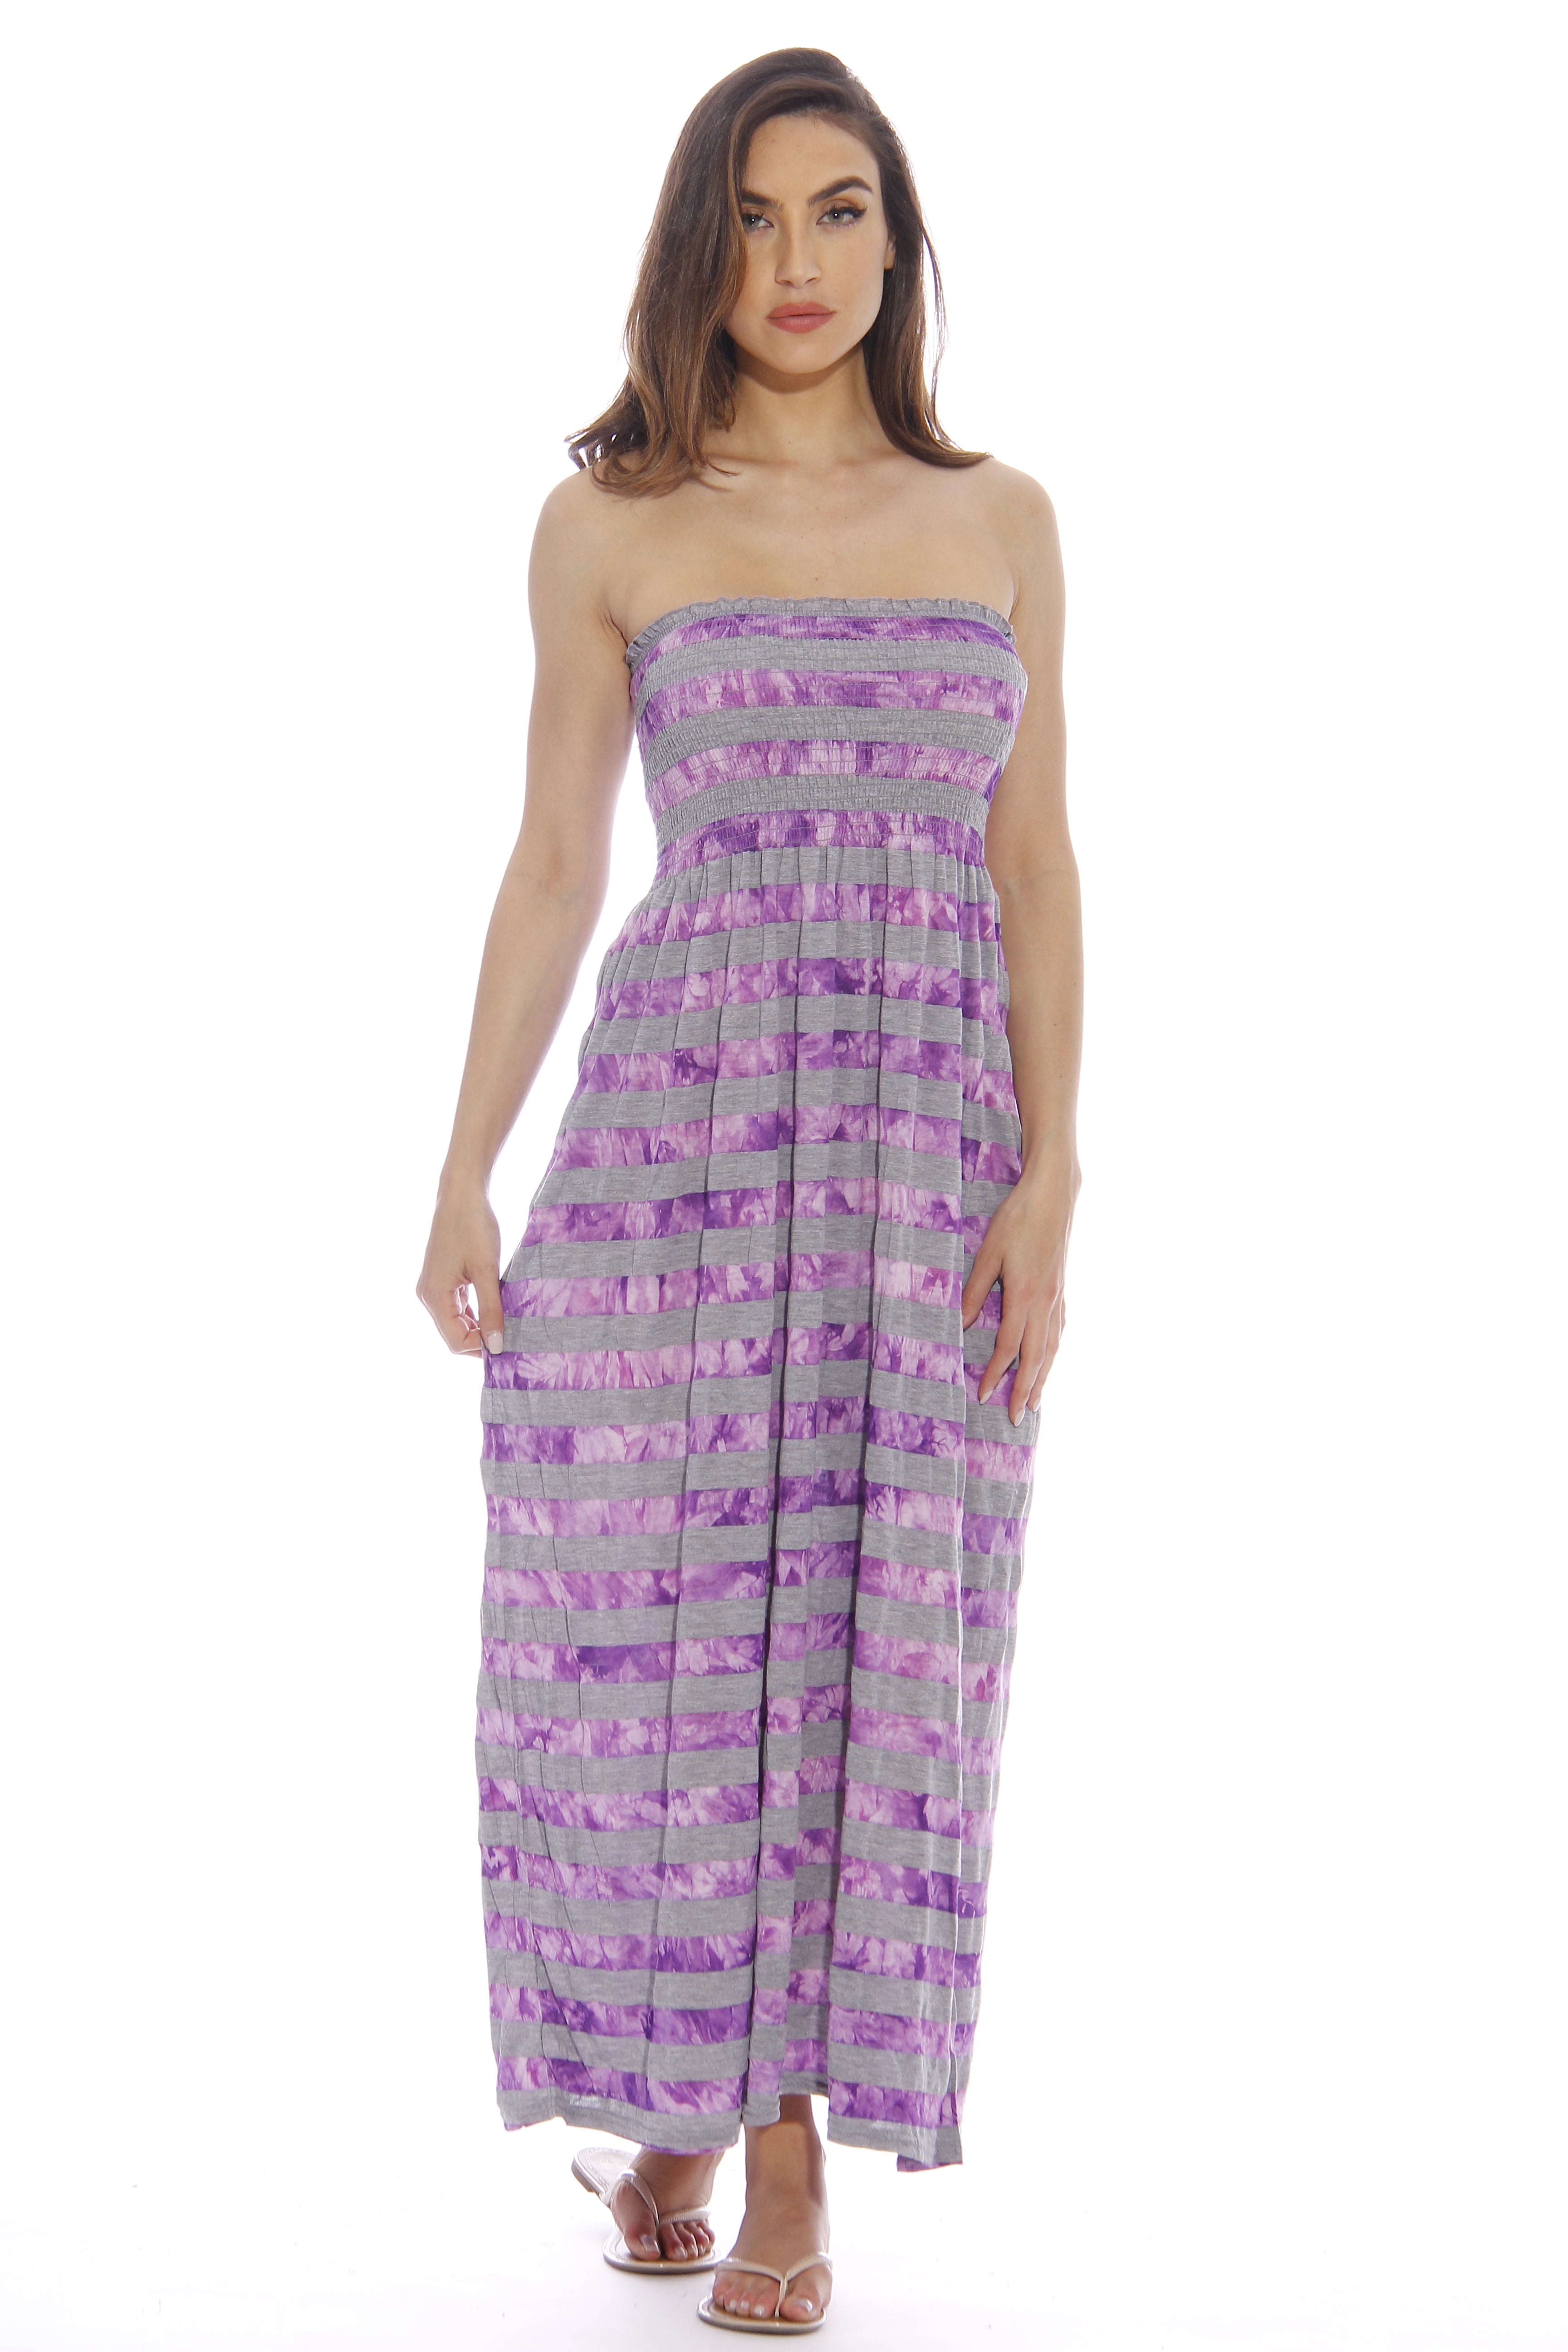 Just Love - Plus Size Maxi Dress / Summer Dresses for Women (Purple, 1X ...